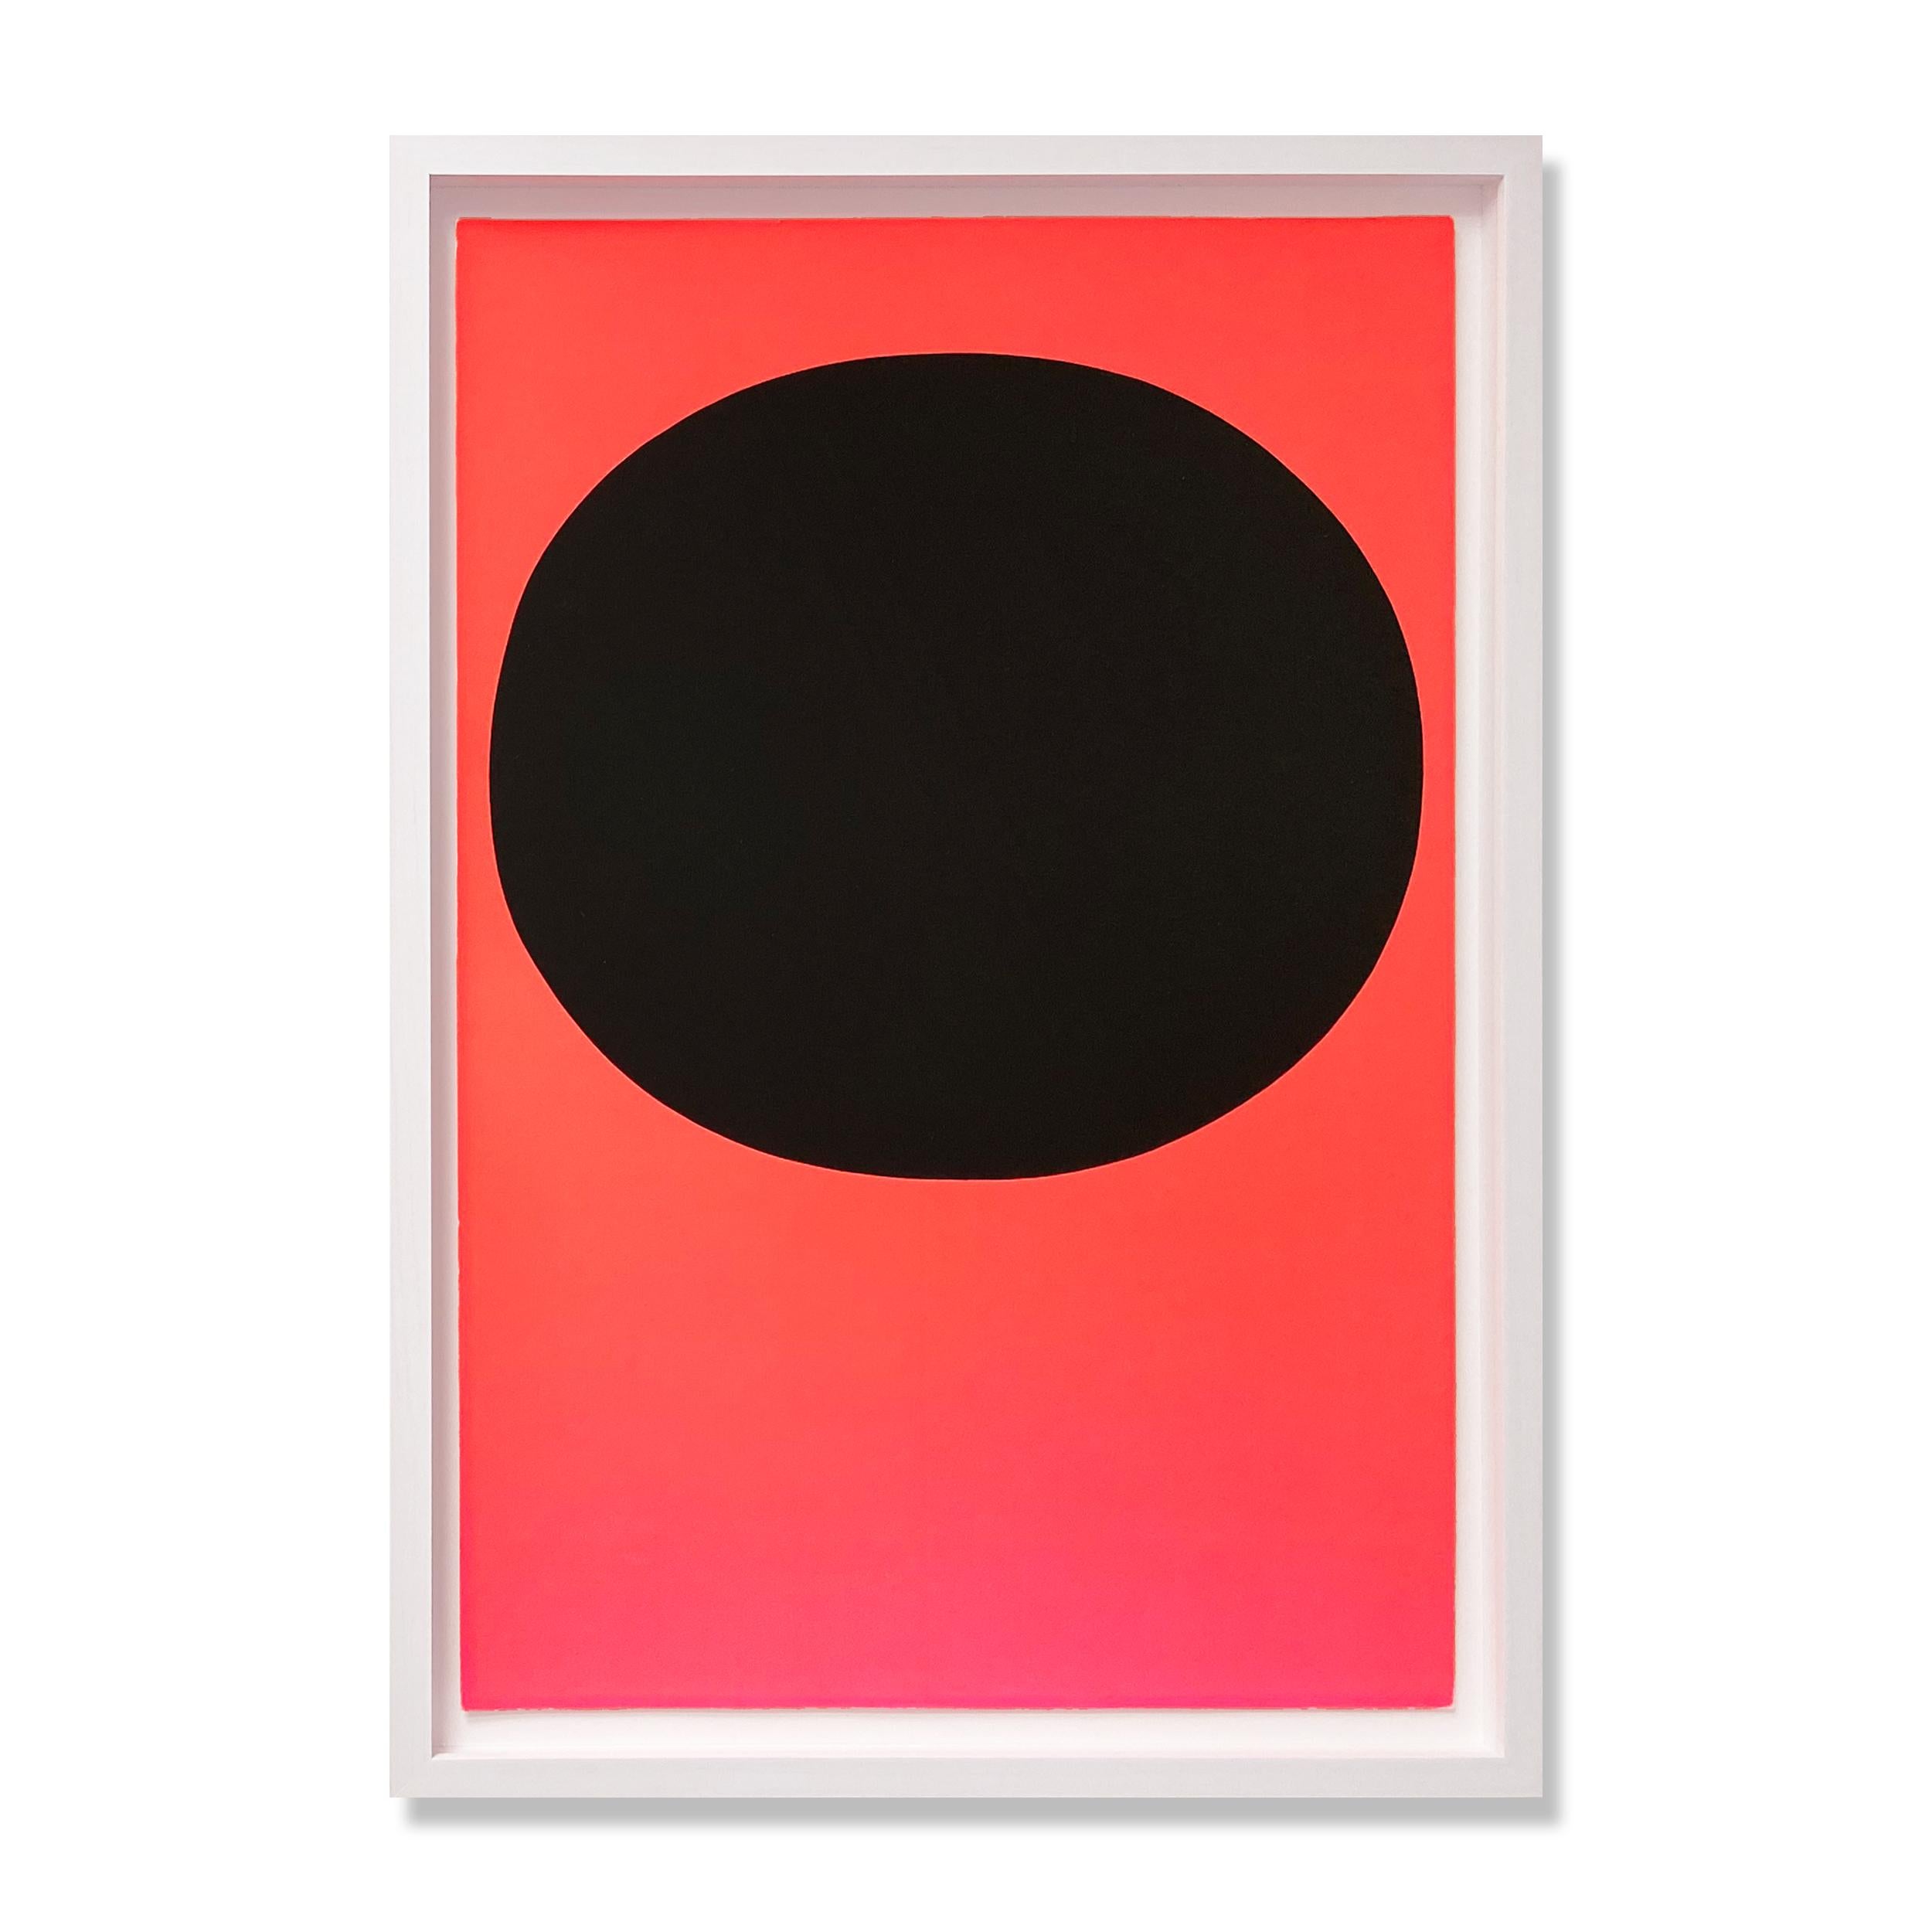 Rupprecht Geiger Interior Print - Black on Orange Red (from Modulation), Abstract Art, Minimalism, 20th Century